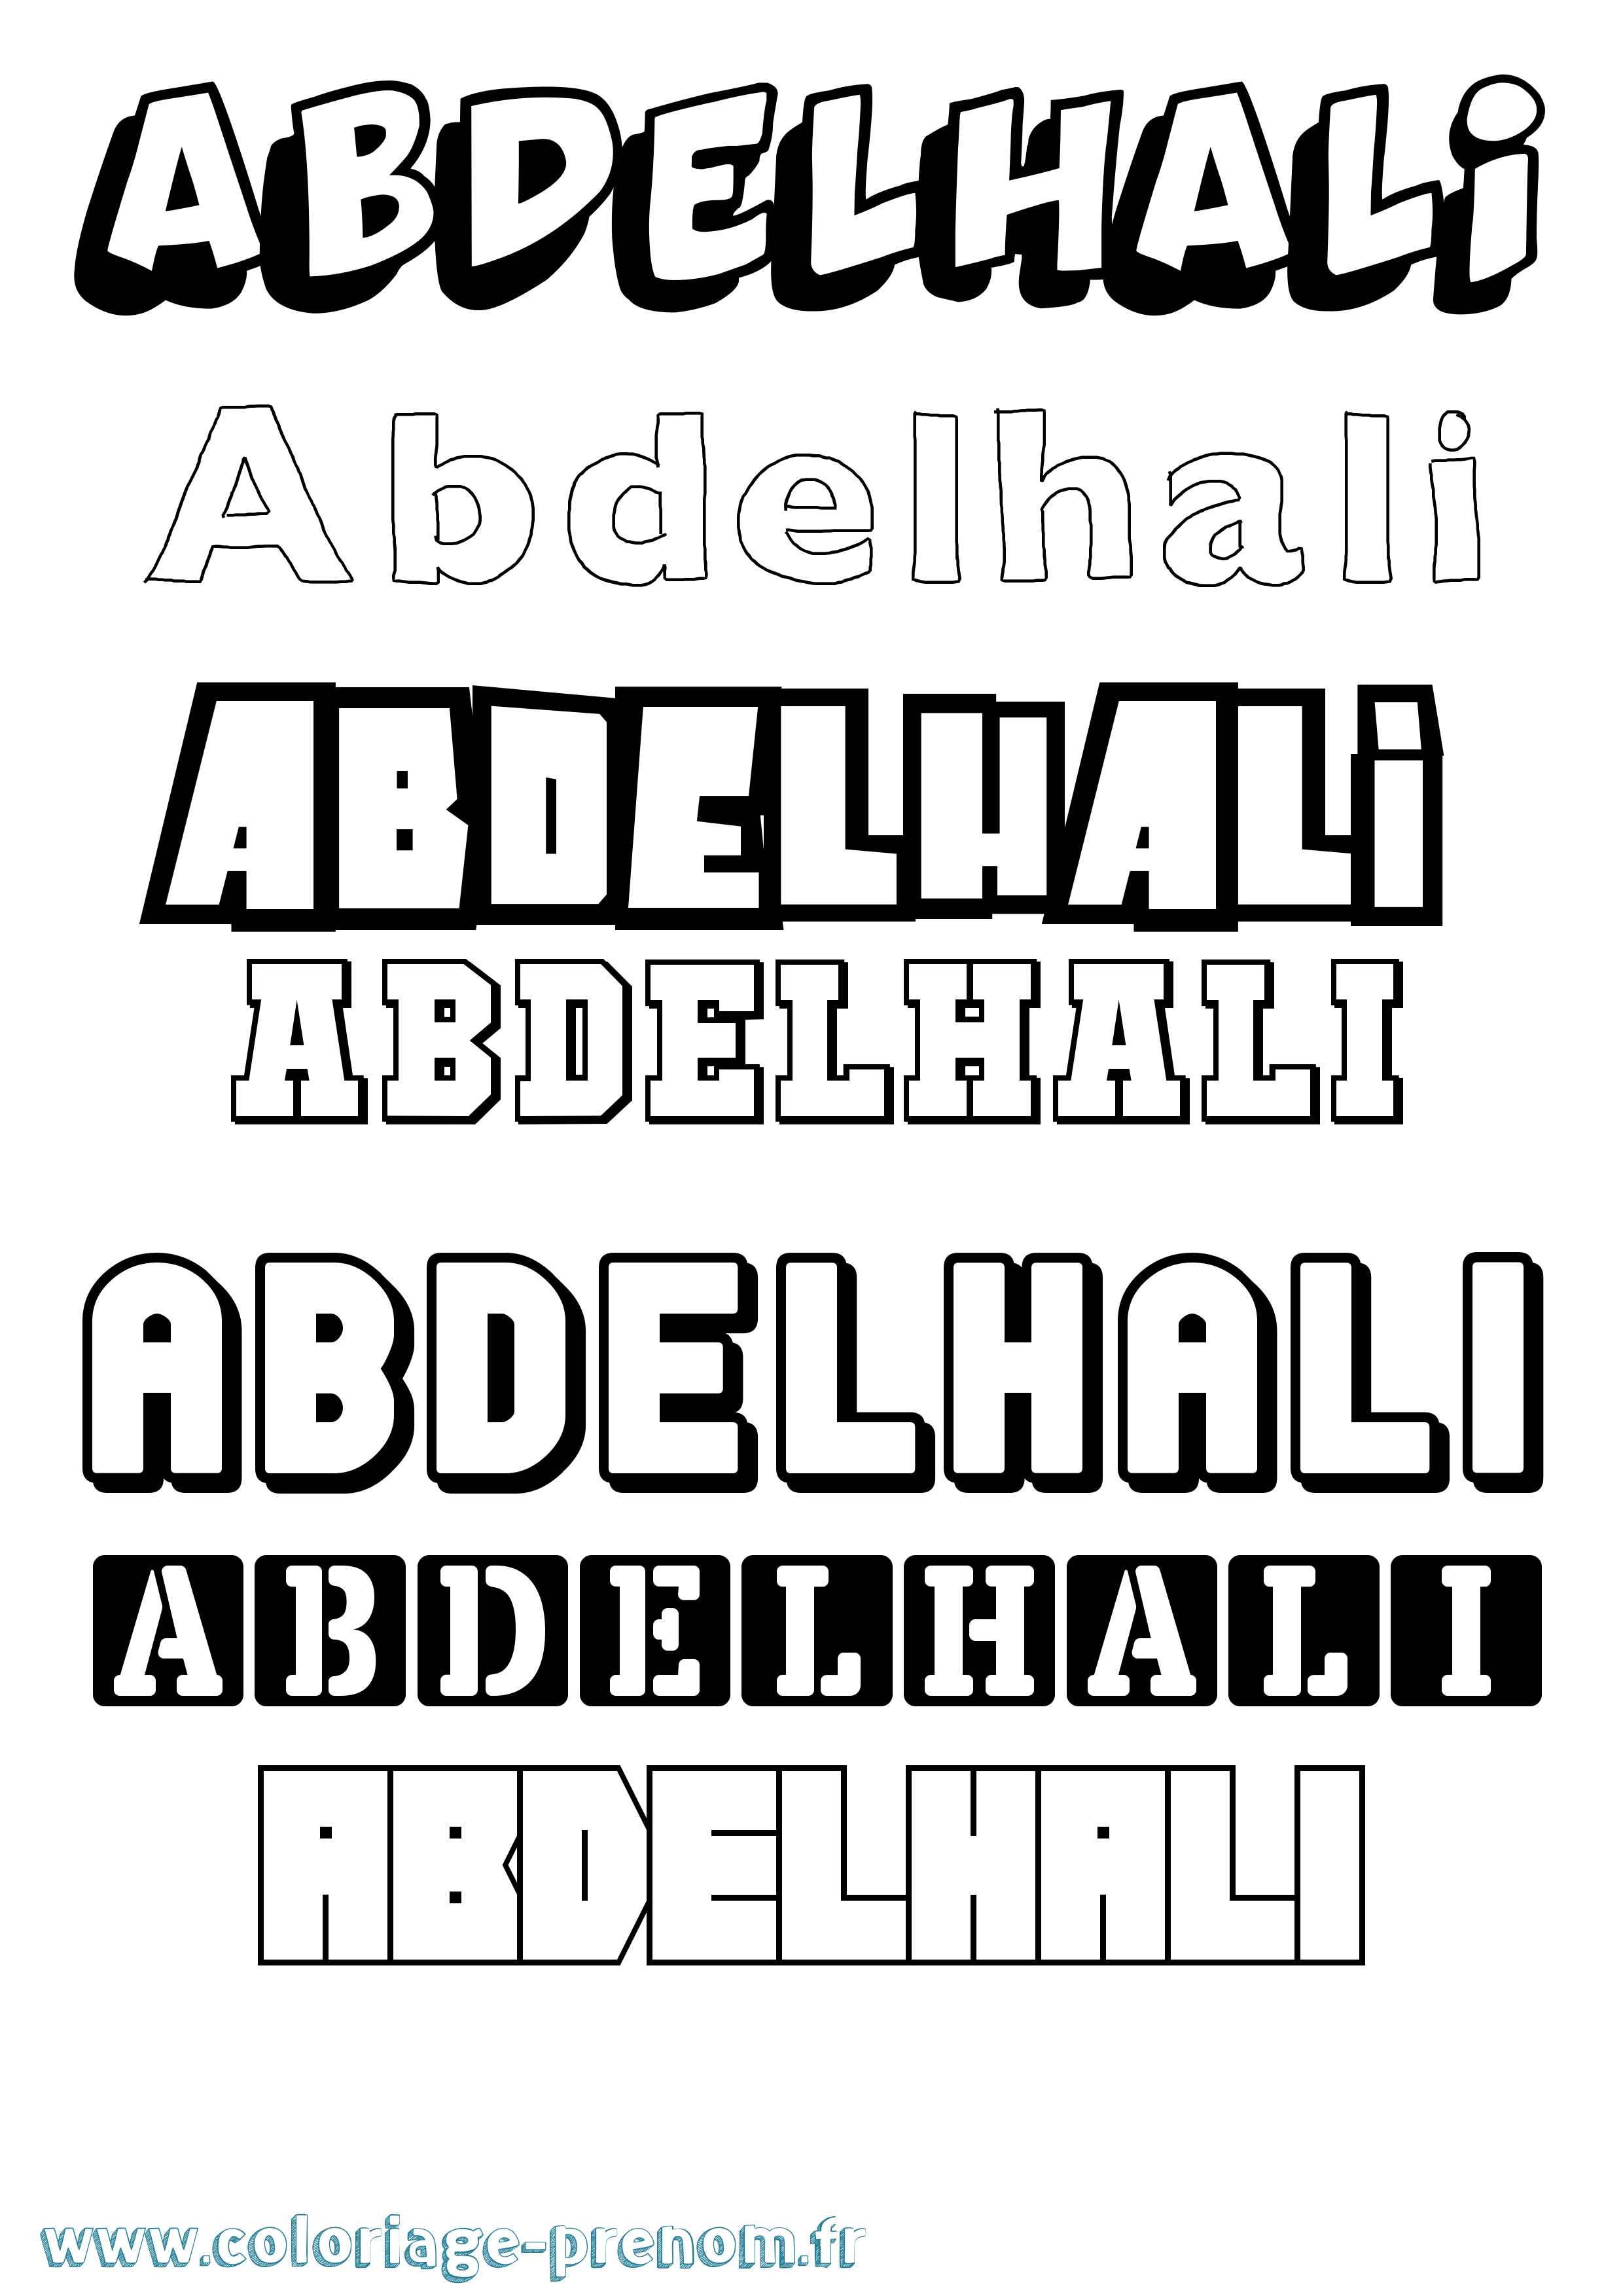 Coloriage prénom Abdelhali Simple